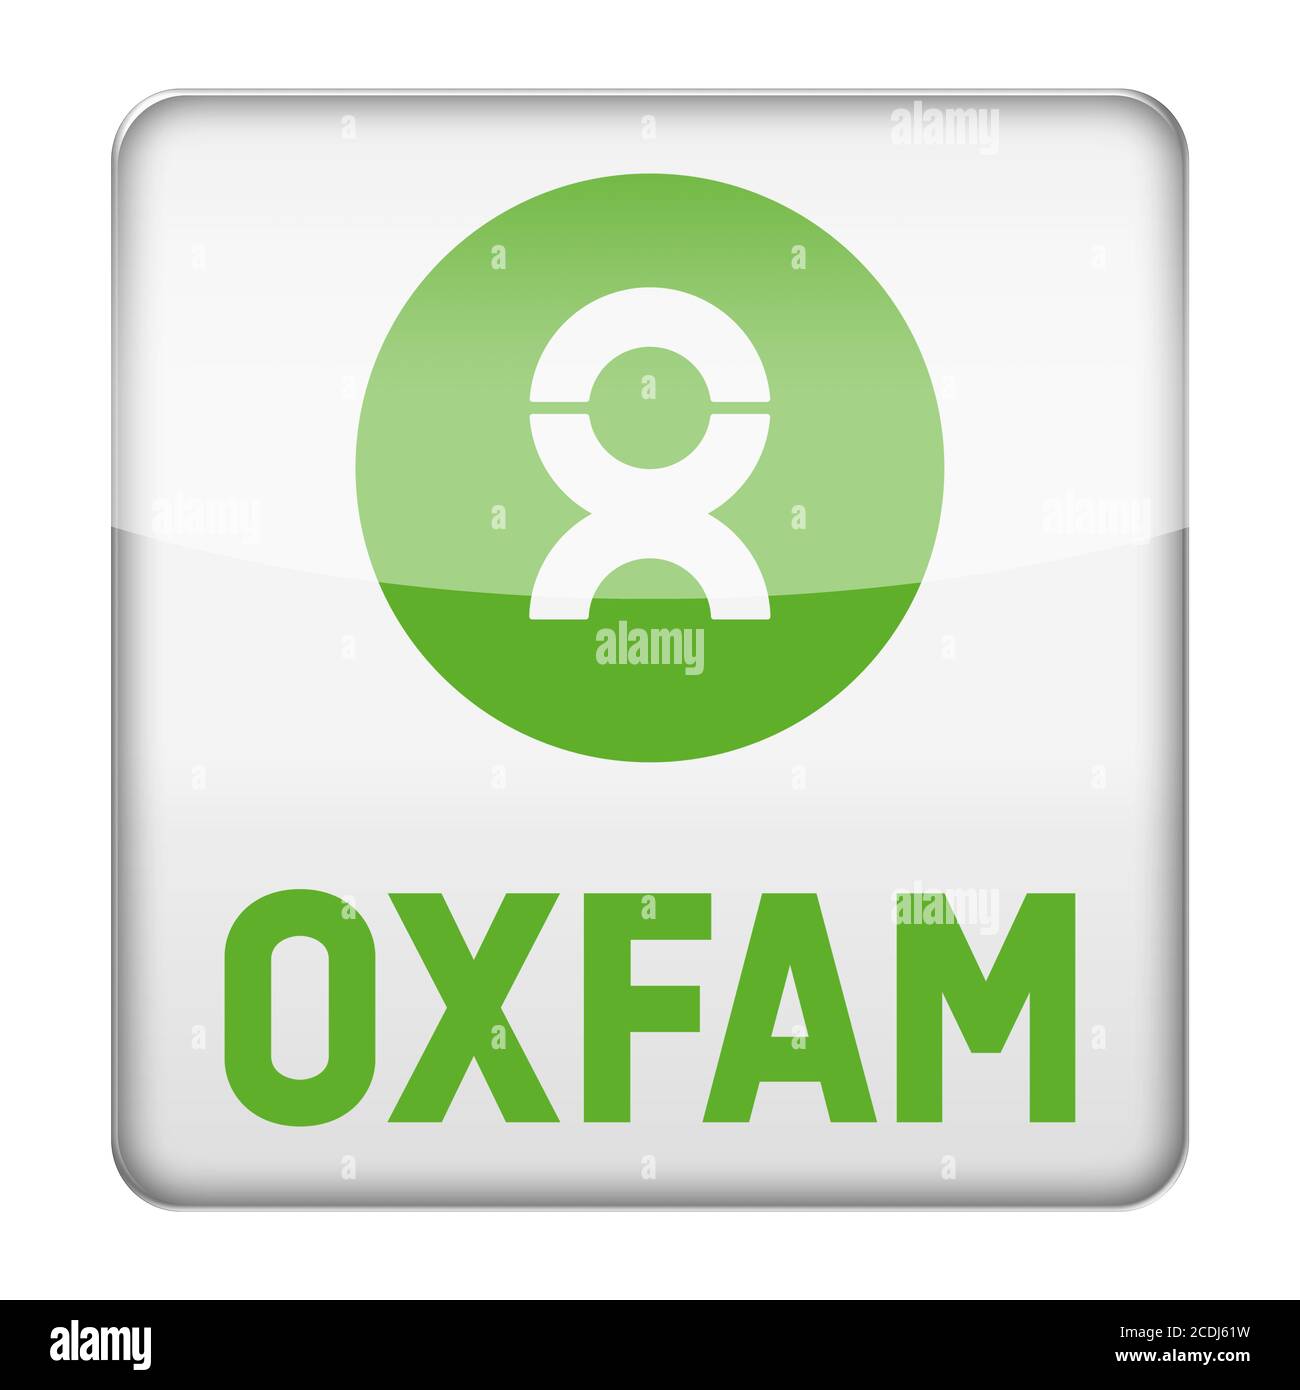 Oxfam logo Stock Photo